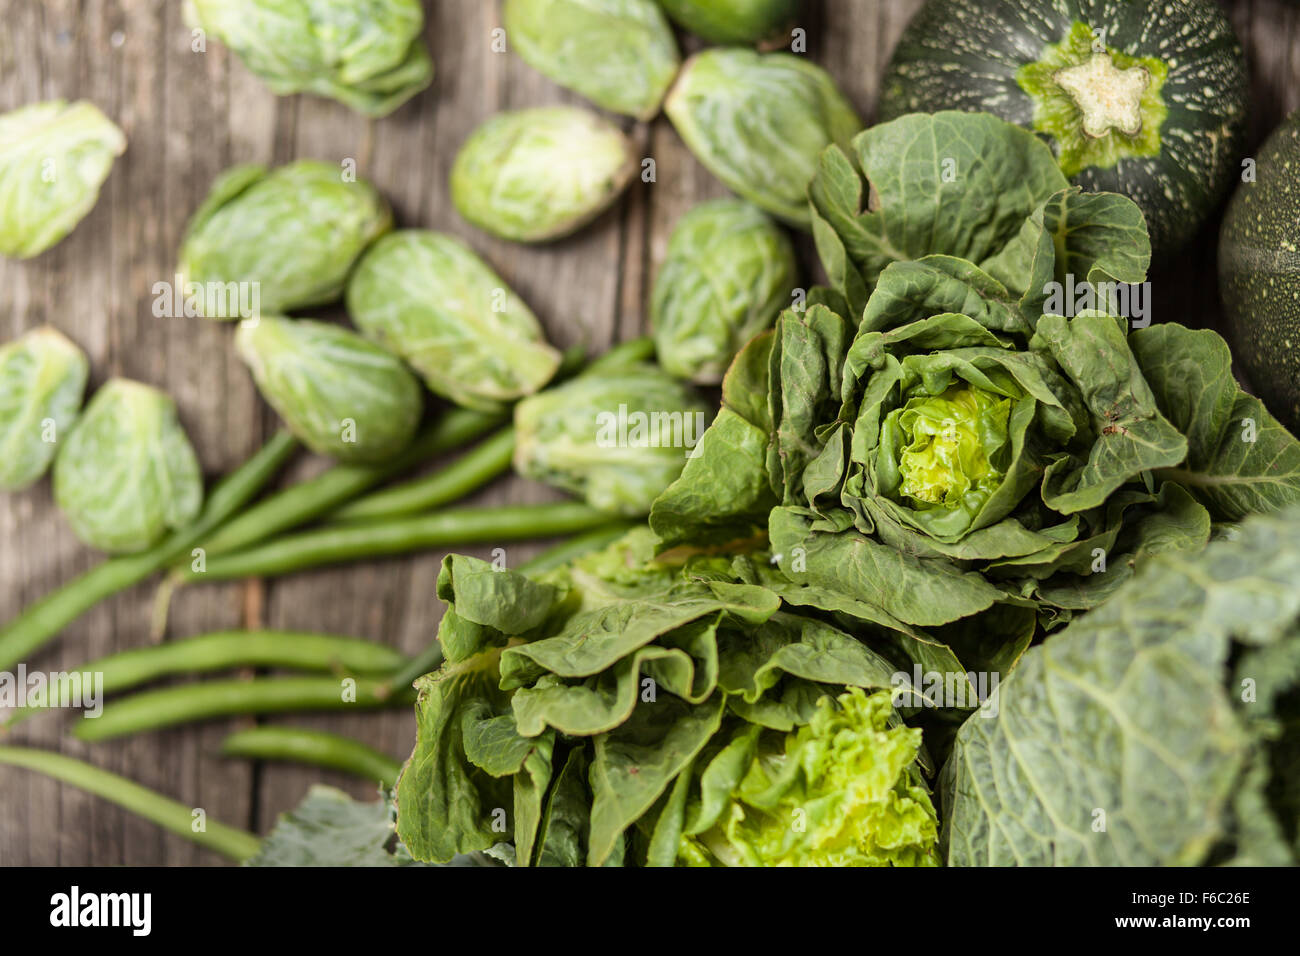 Assortimento di verdure verdi Foto Stock